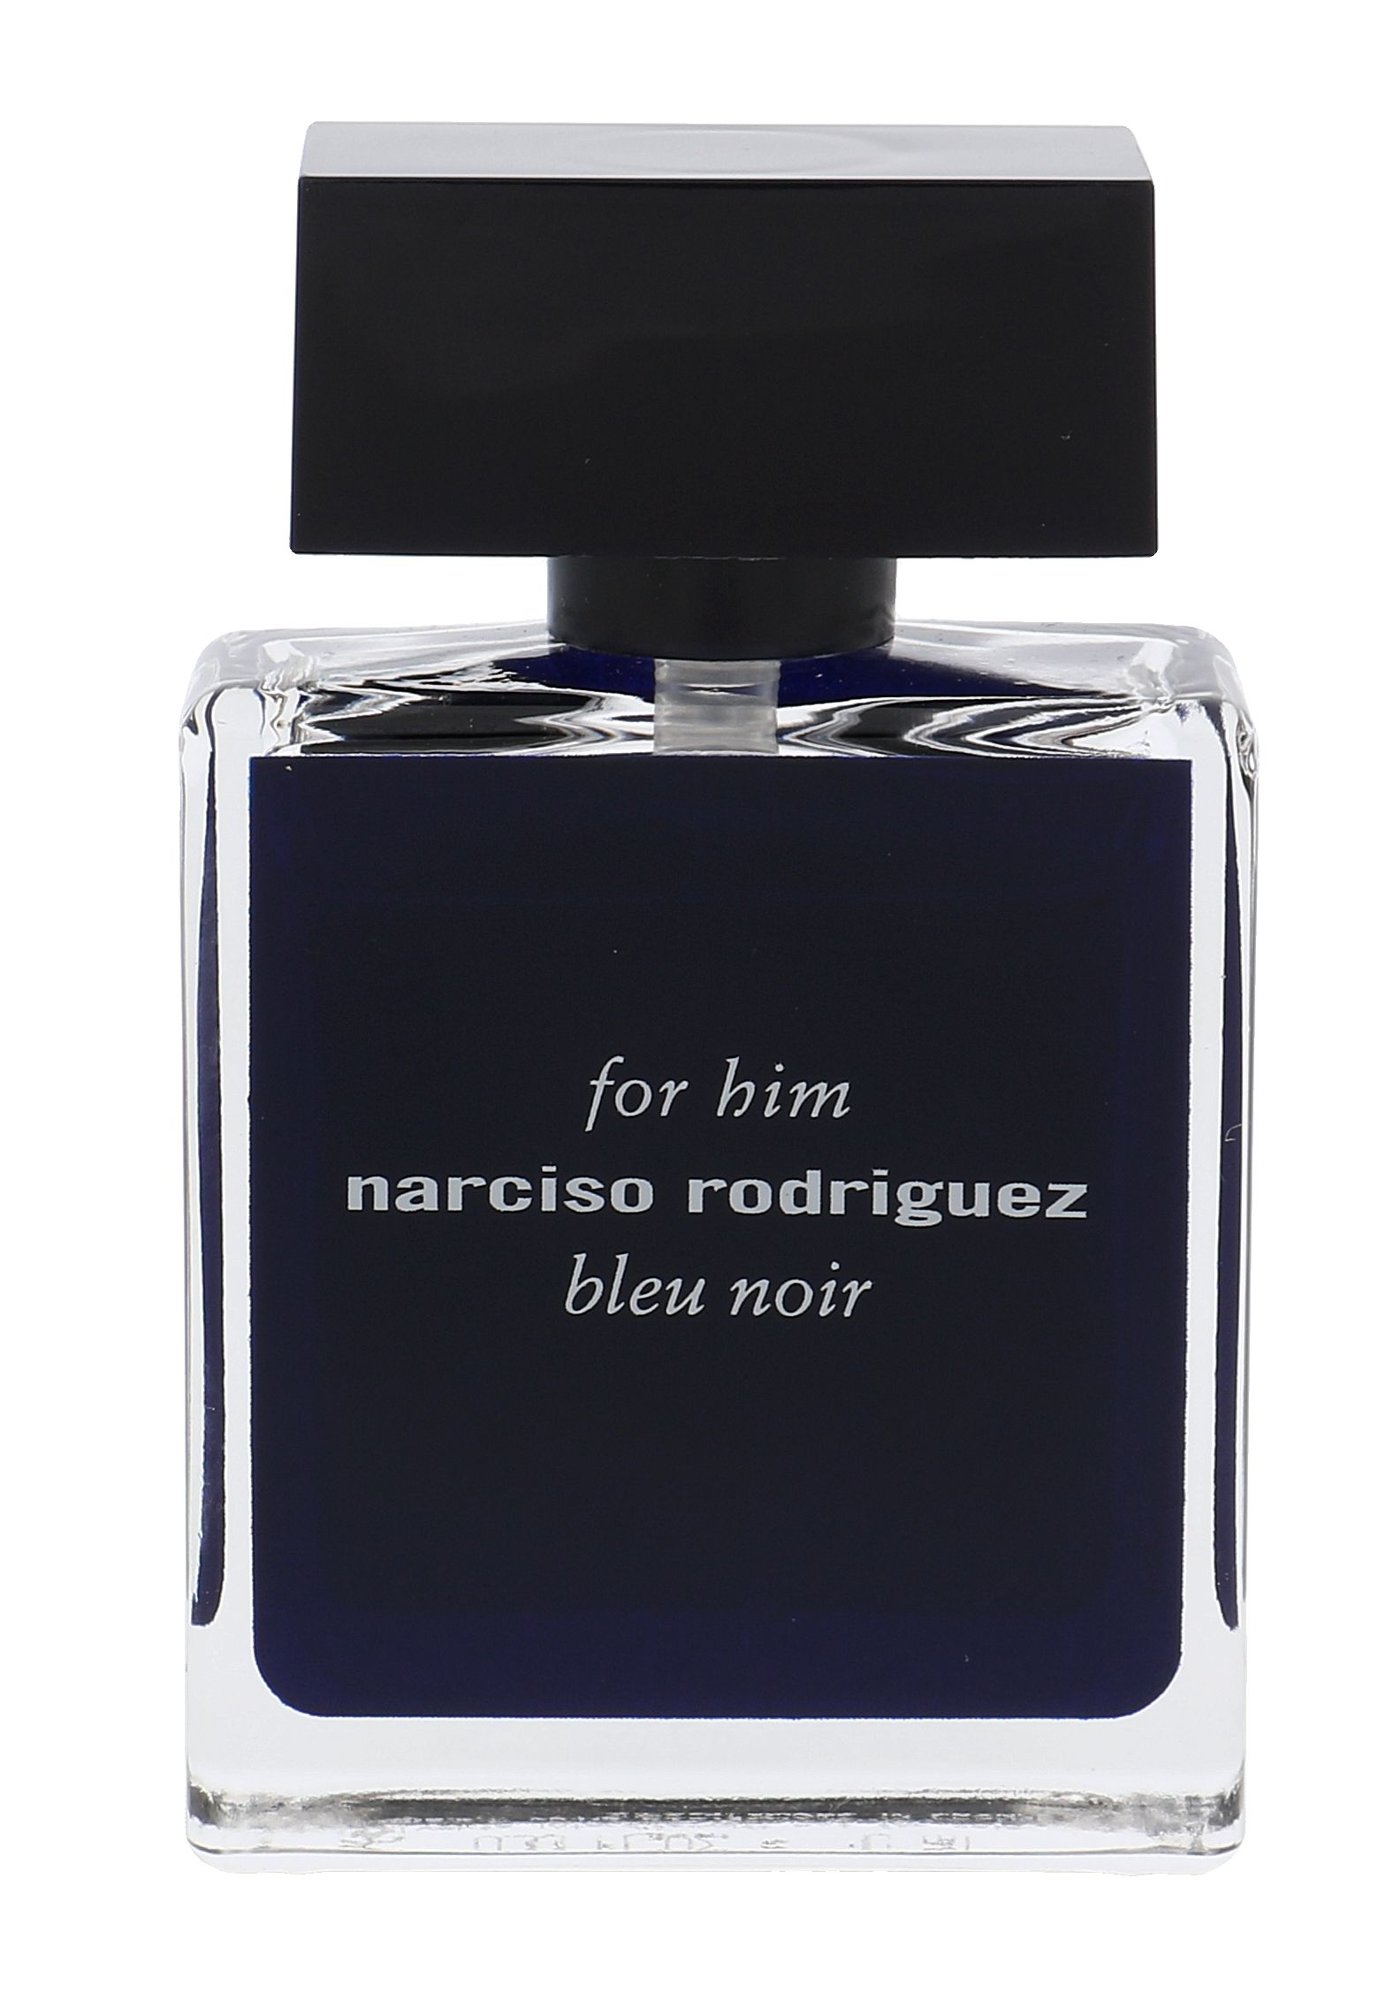 Narciso rodriguez for him bleu. Narciso Rodriguez for him bleu Noir. Narciso Rodriguez bleu Noir. Парфюм Нарцис Родригес Блю. Narciso Rodriguez for him.